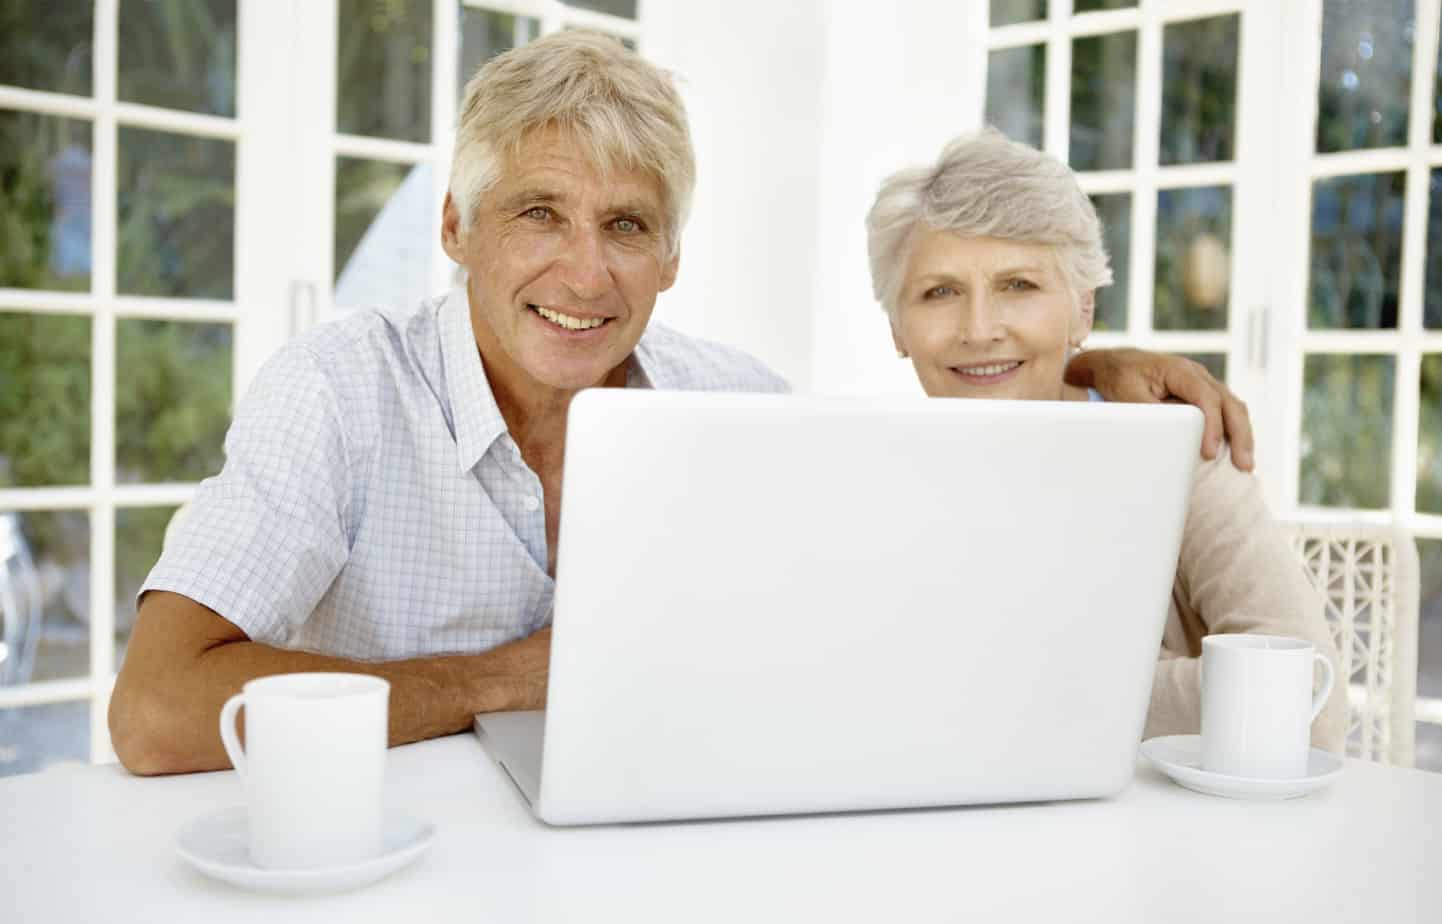 Featured image for “Seniors Bridging the Digital Divide Despite Doubters”